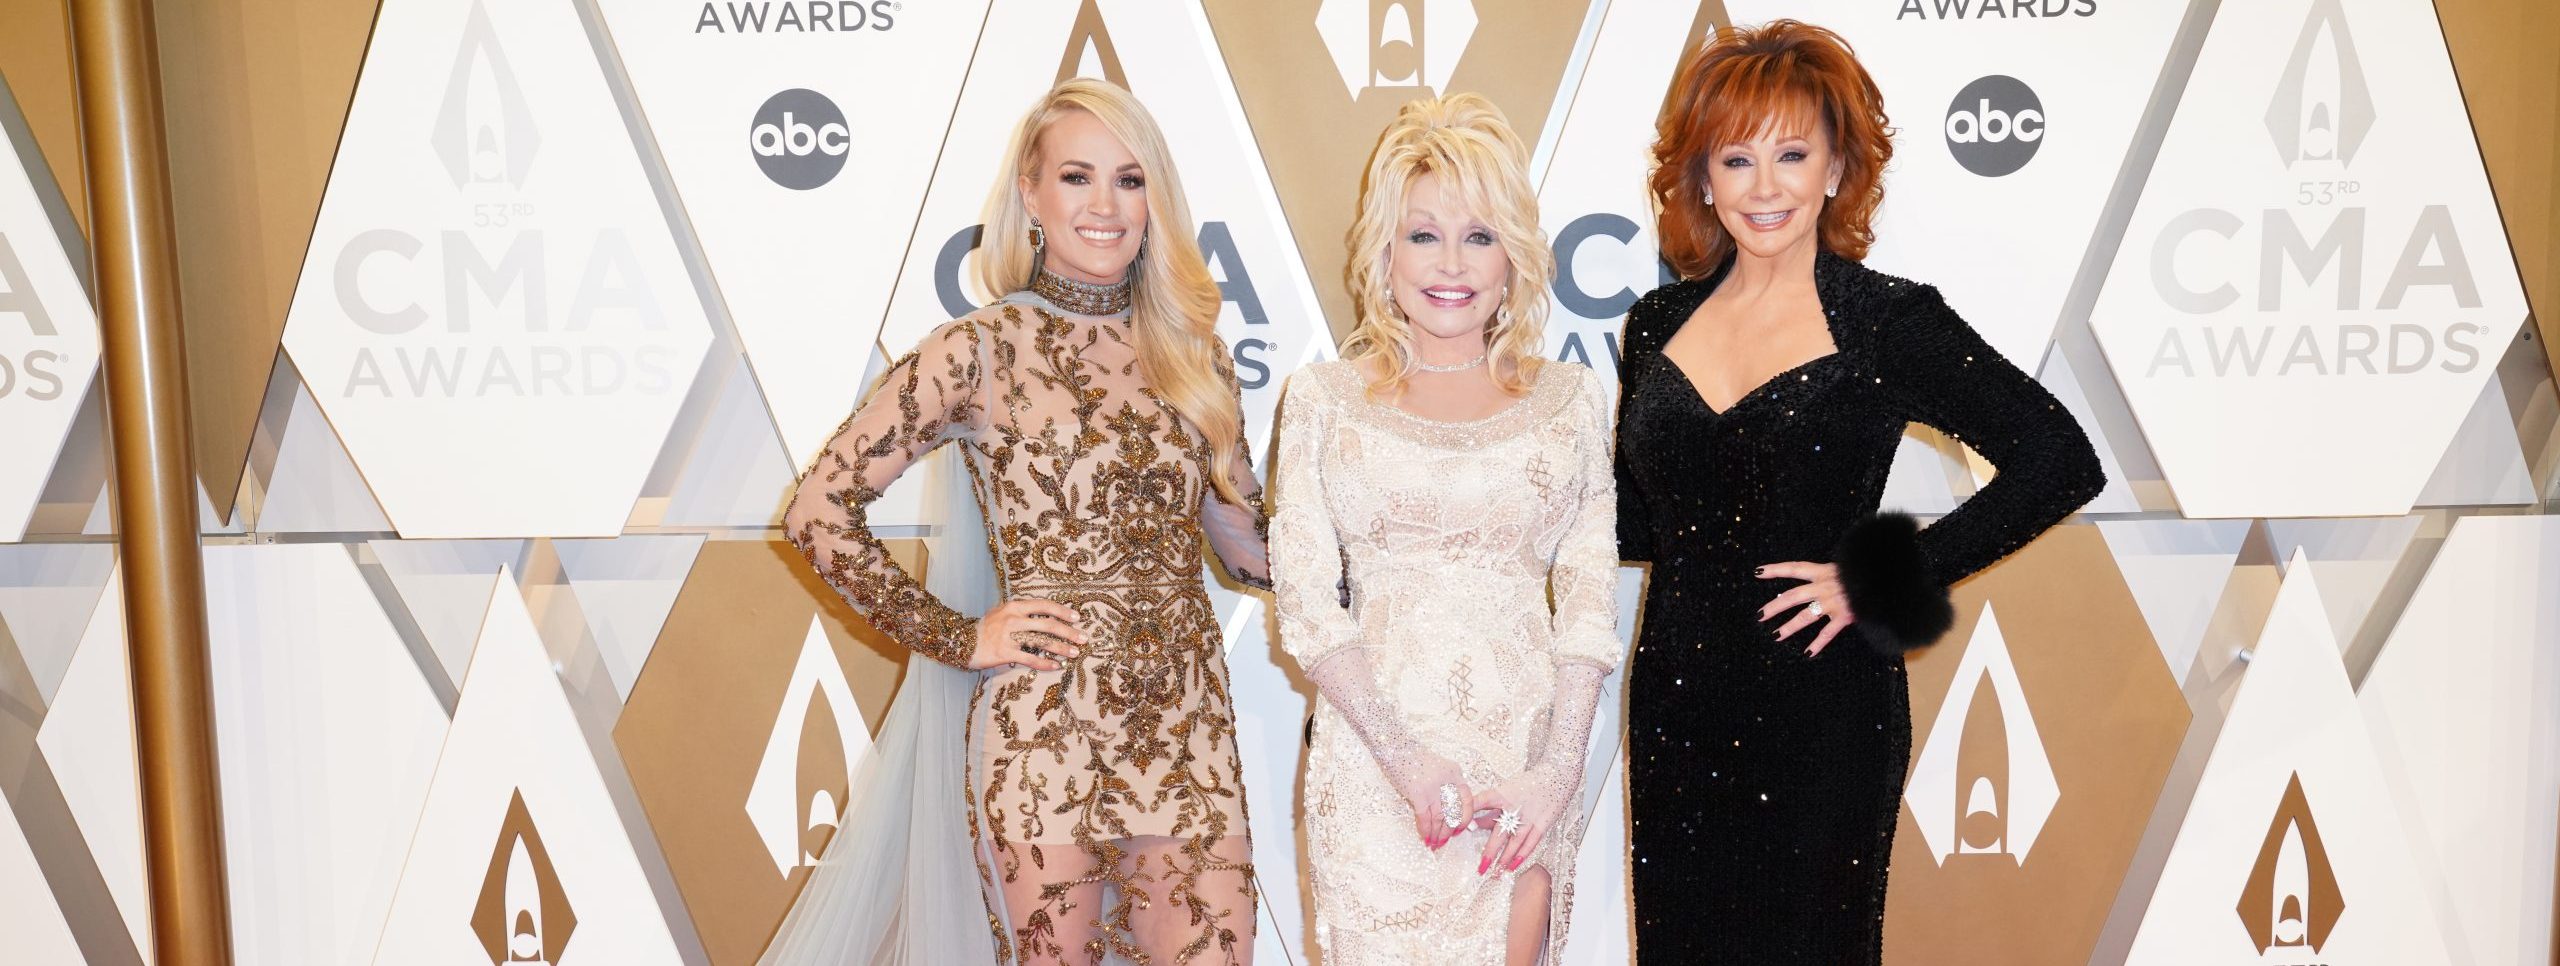 Top CMA Awards Fashion Through The Years The Nashville Edit